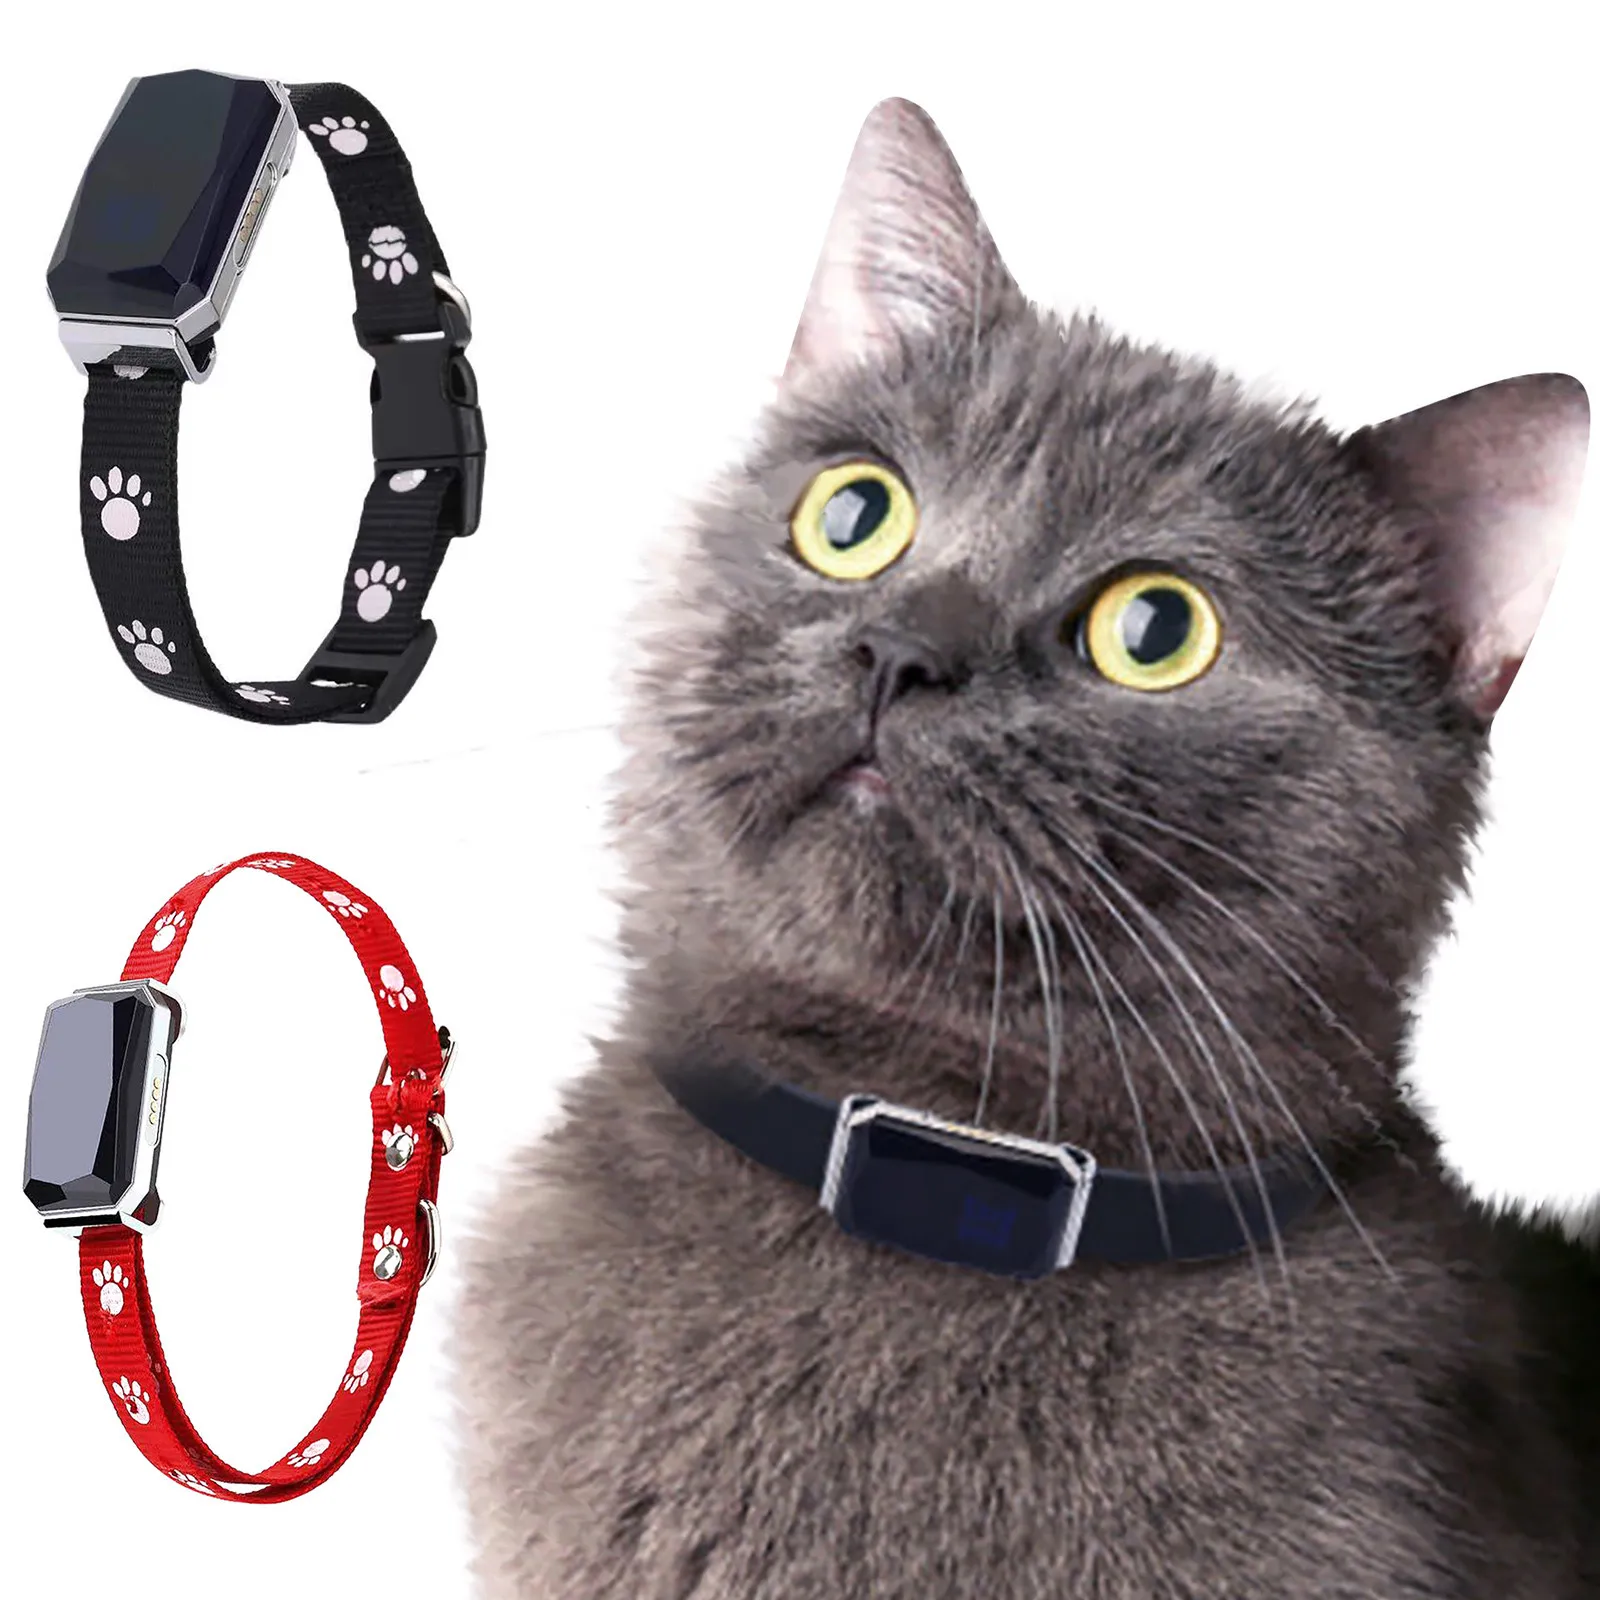 

Mini localizador GPS P03 para mascotas, Collar impermeable, localizador de perros y gatos, aplicación de alarma de valla intelig